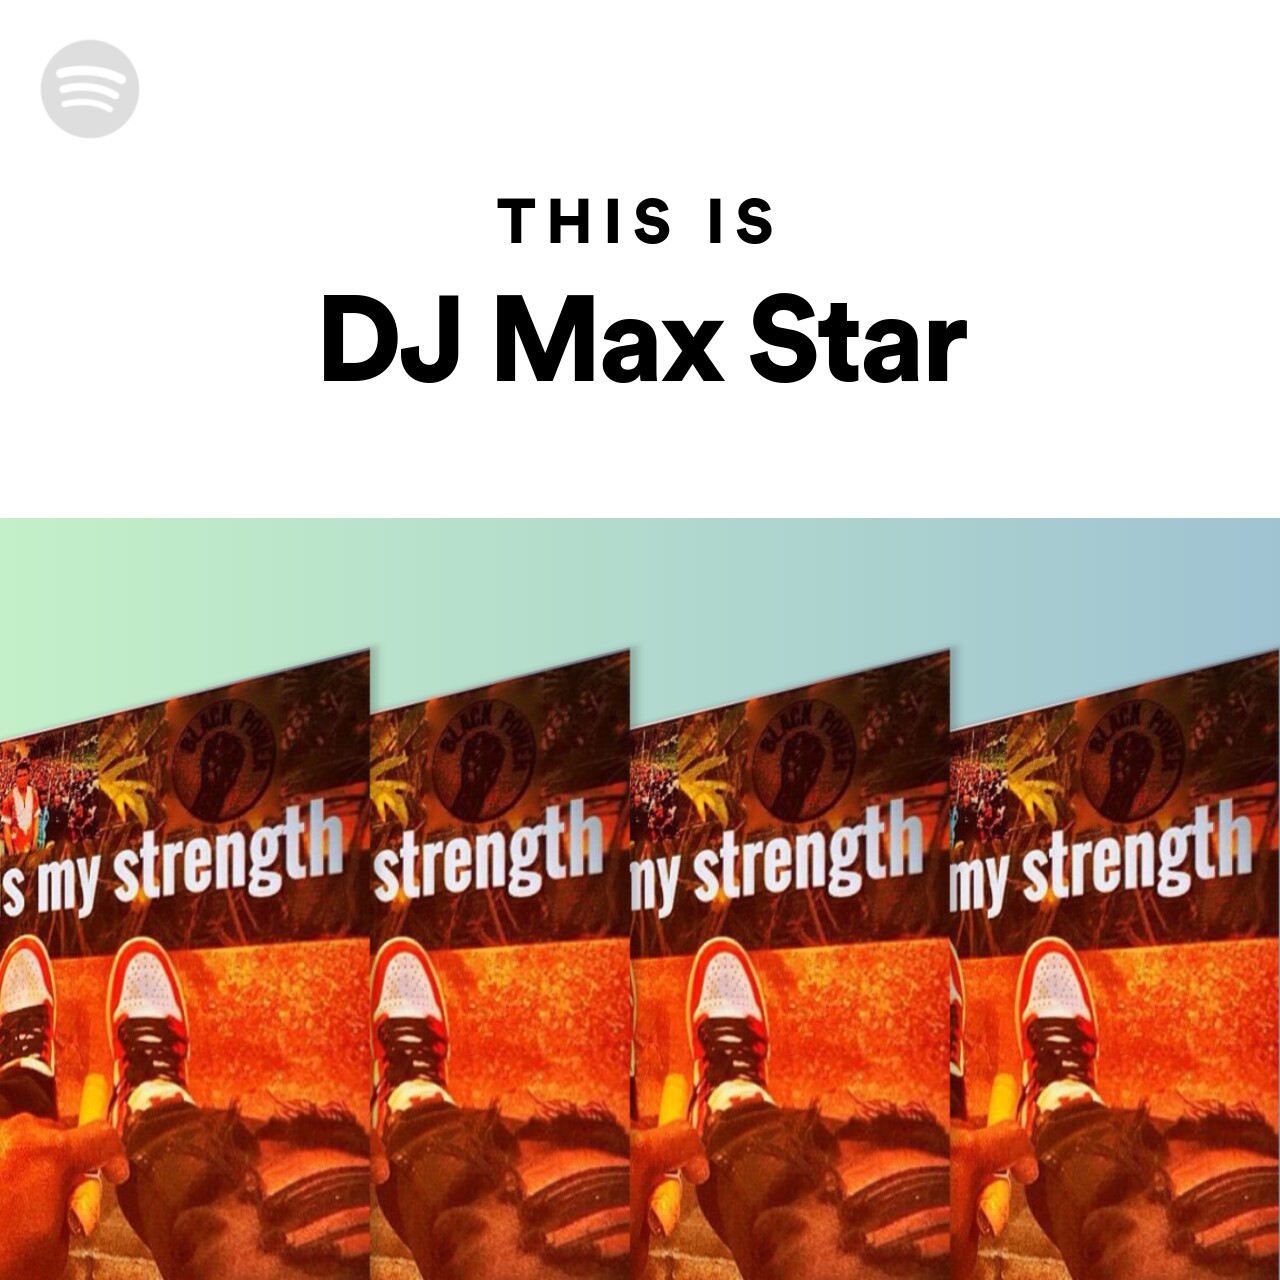 This Is DJ Max Star